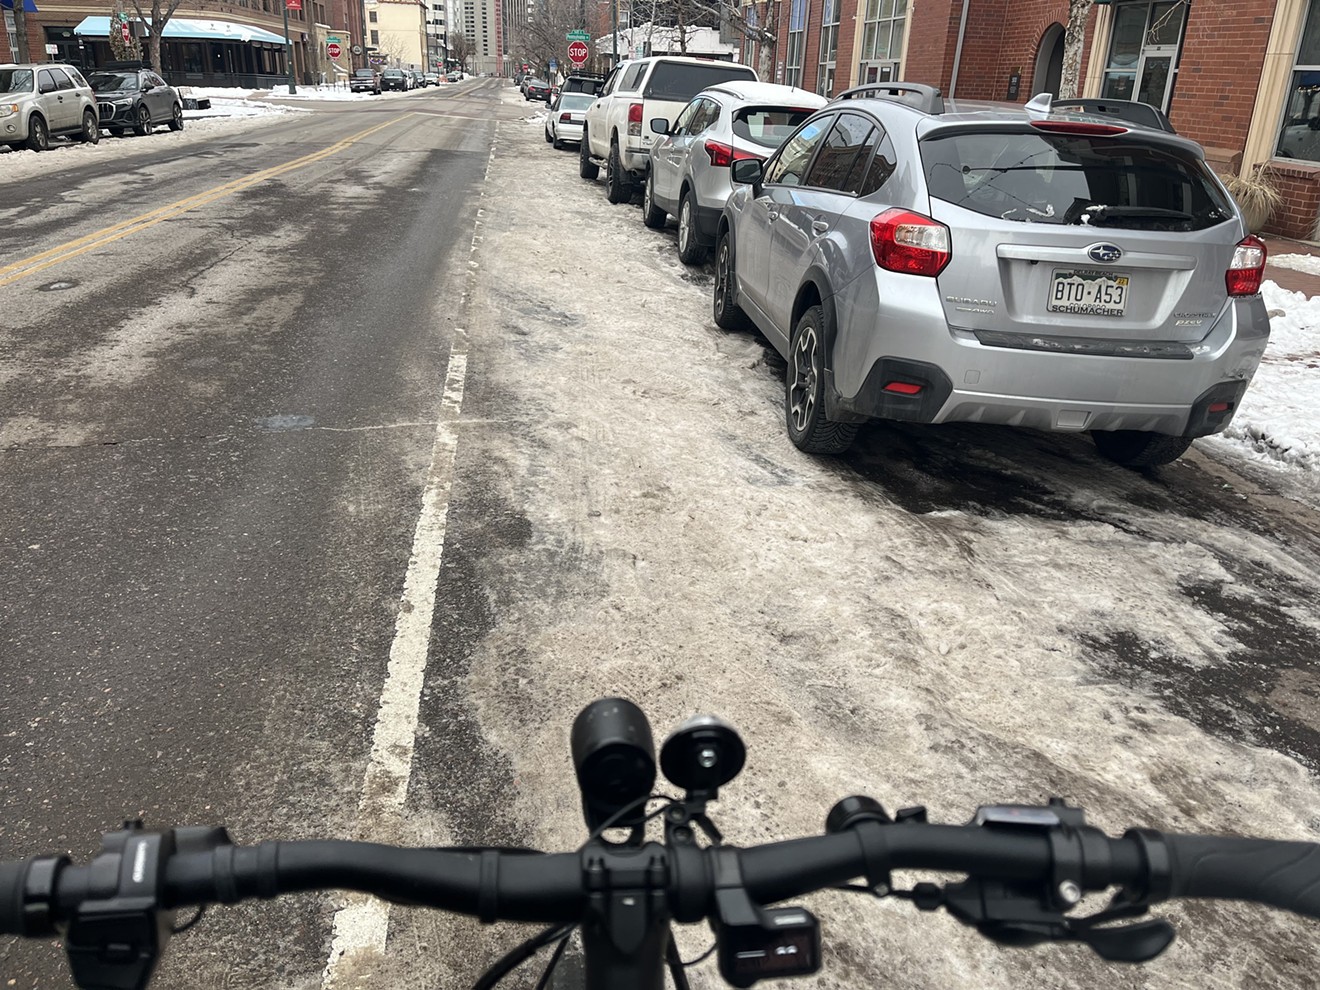 Someone needs to plow the damn bike lanes.